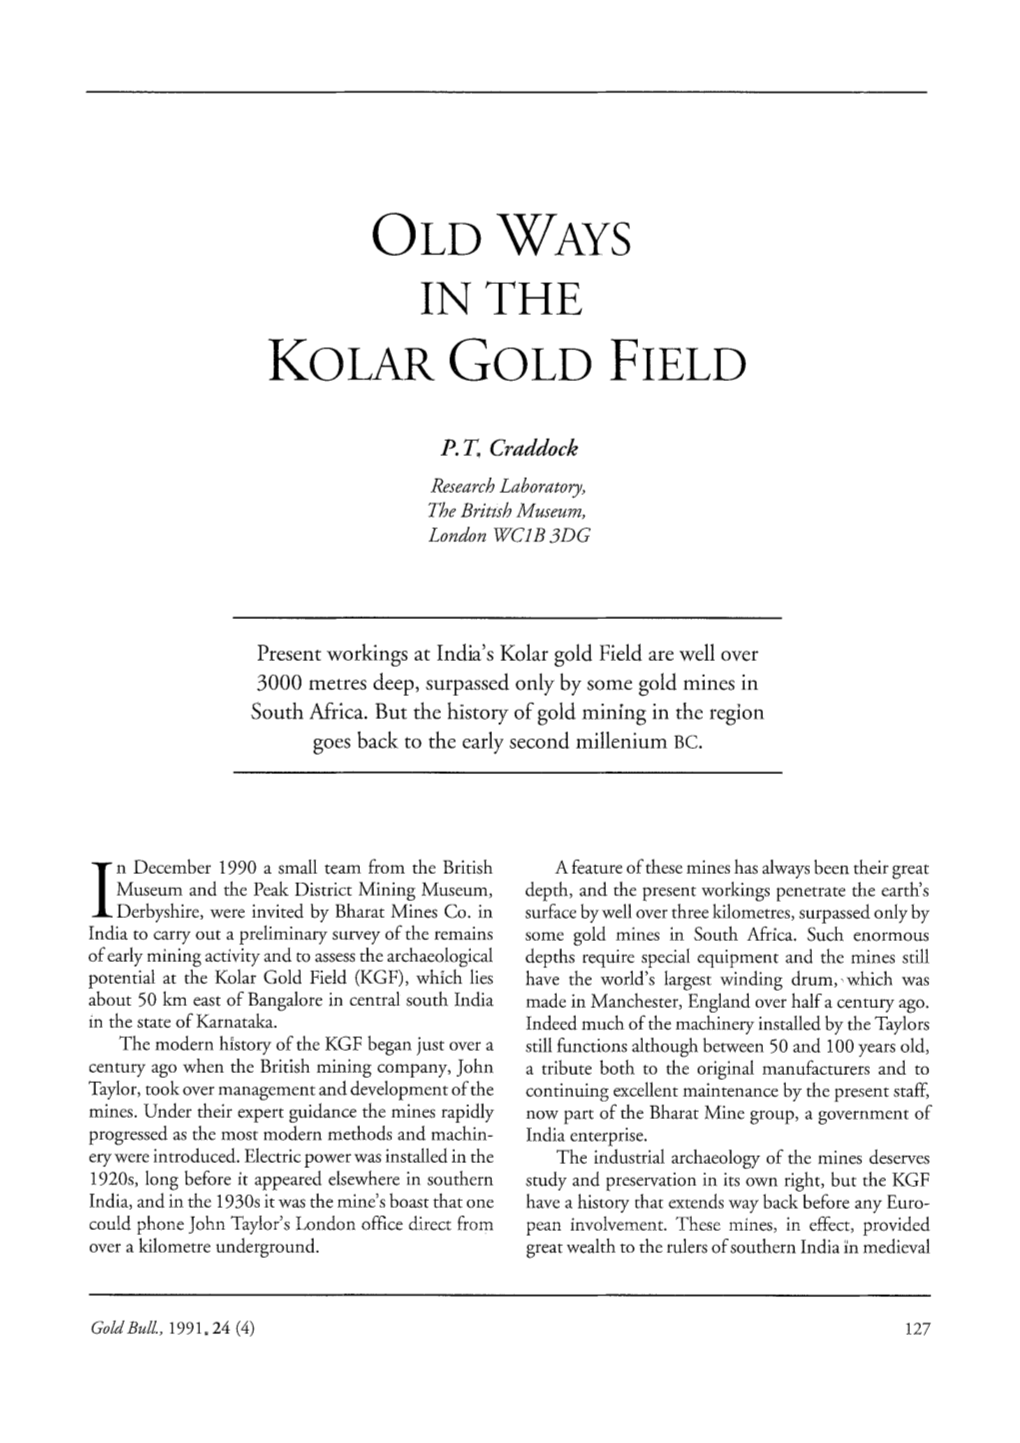 Old Ways in the Kolar Gold Field